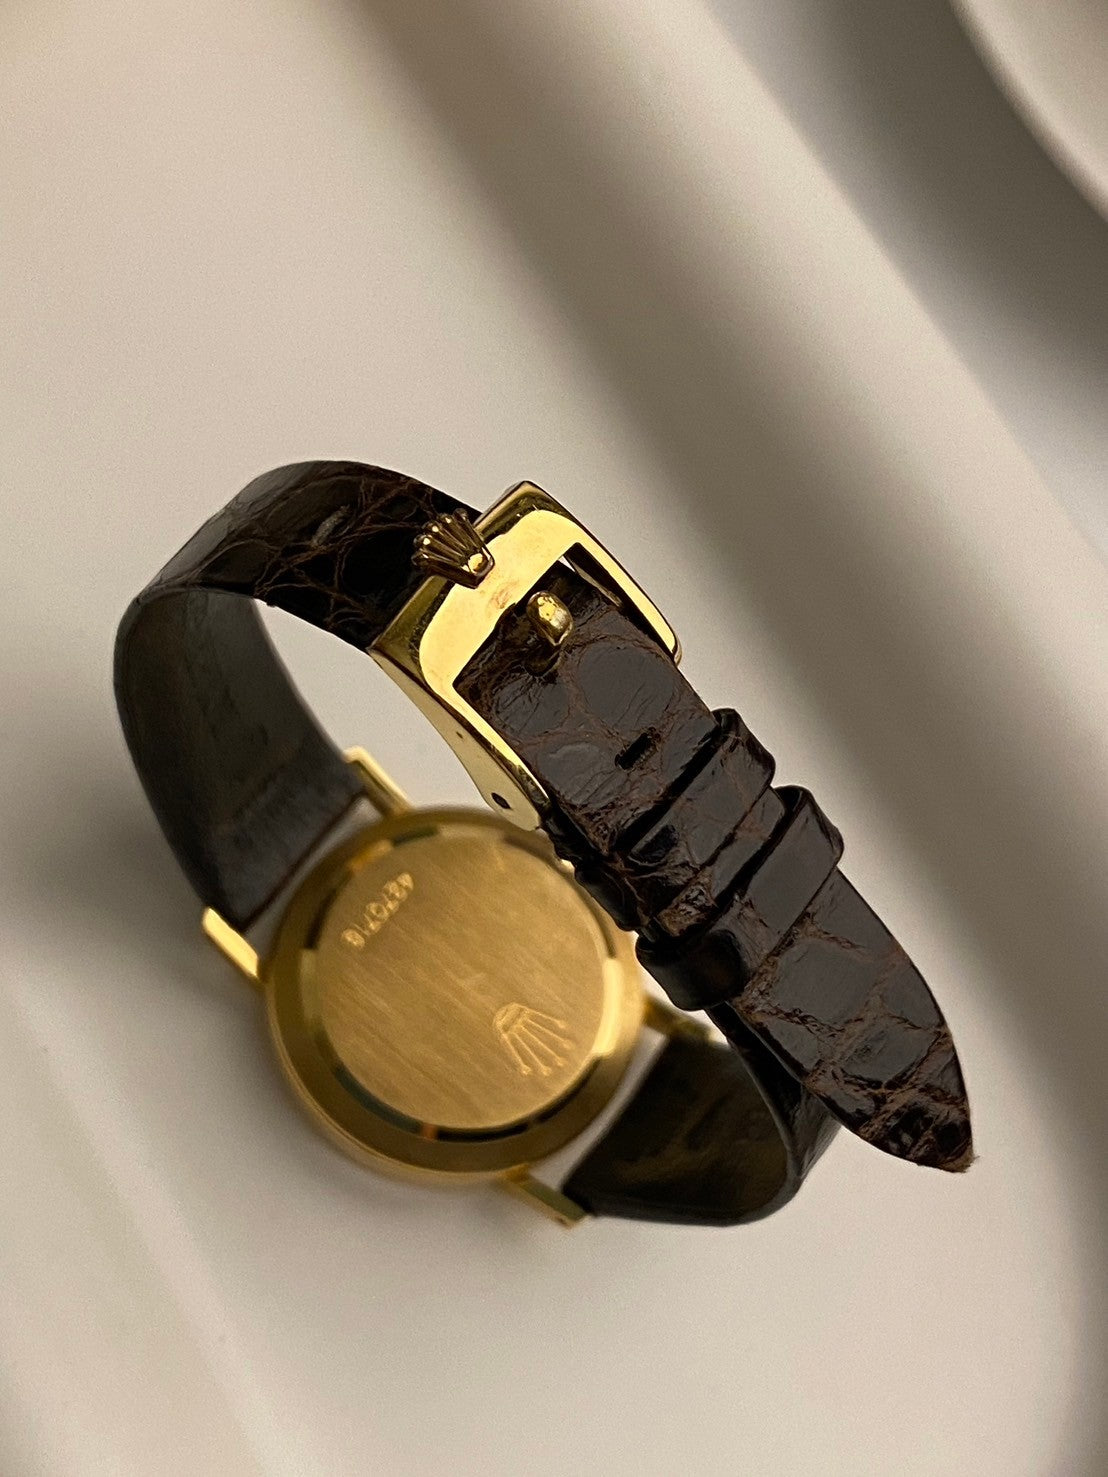 Rolex cellini gold dial